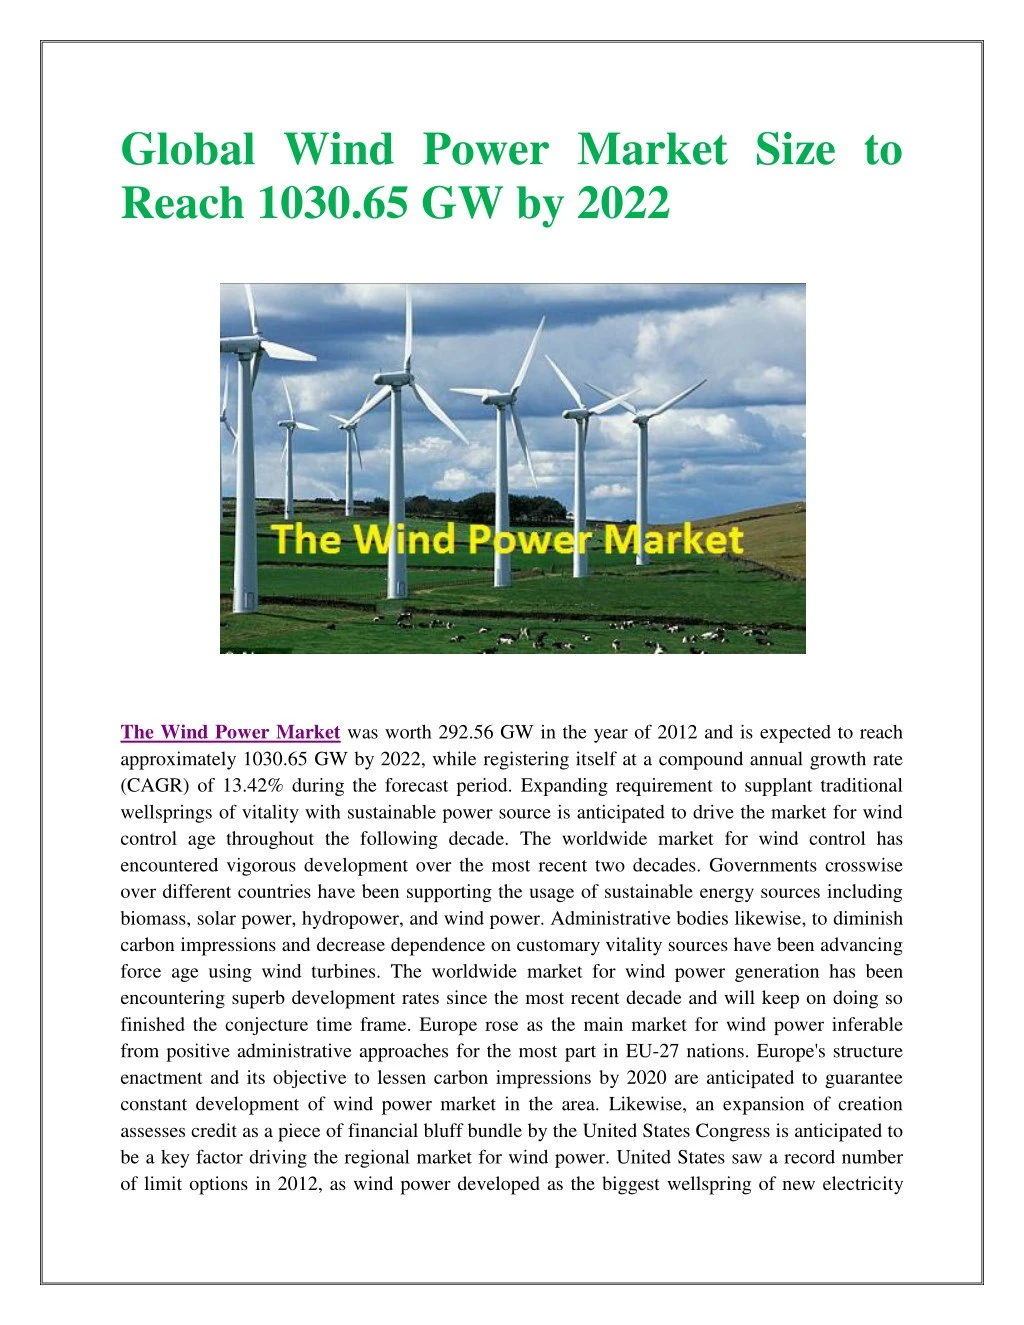 global wind power market size to reach 1030